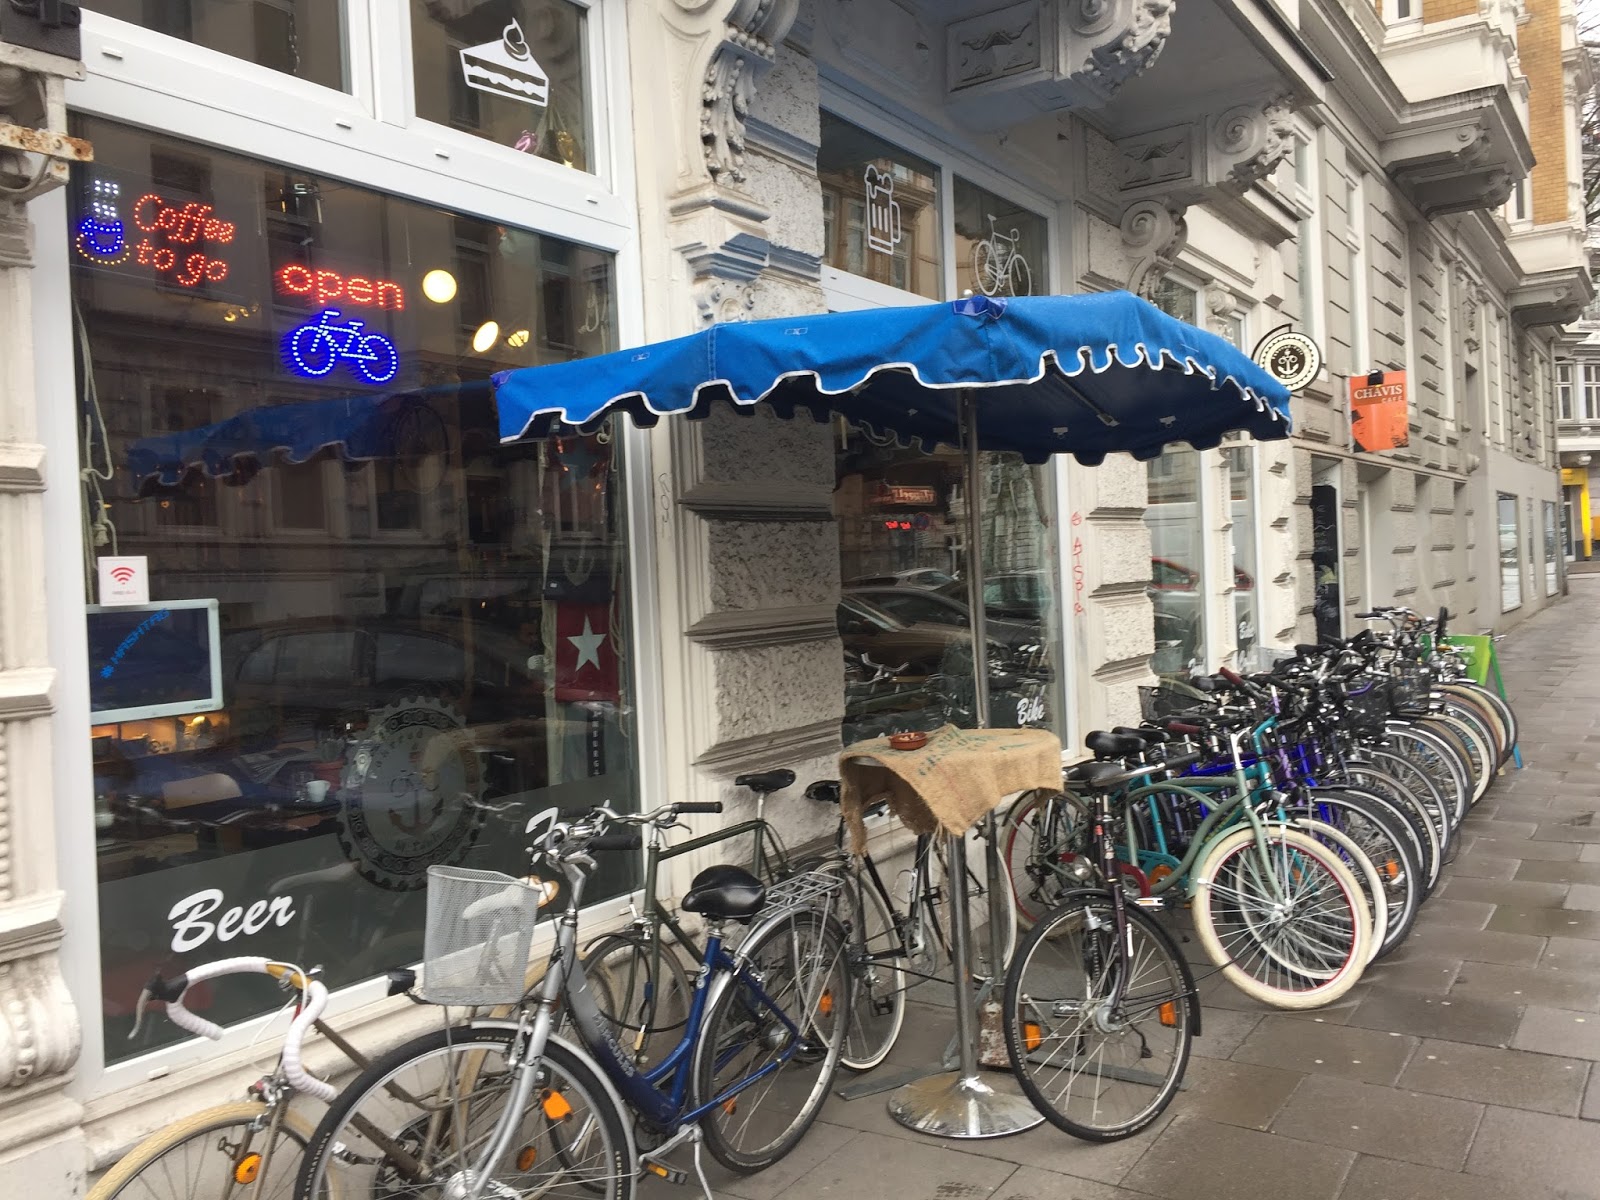 StPedali FahrradCafé Hamburg Tolles Service auf St. Pauli